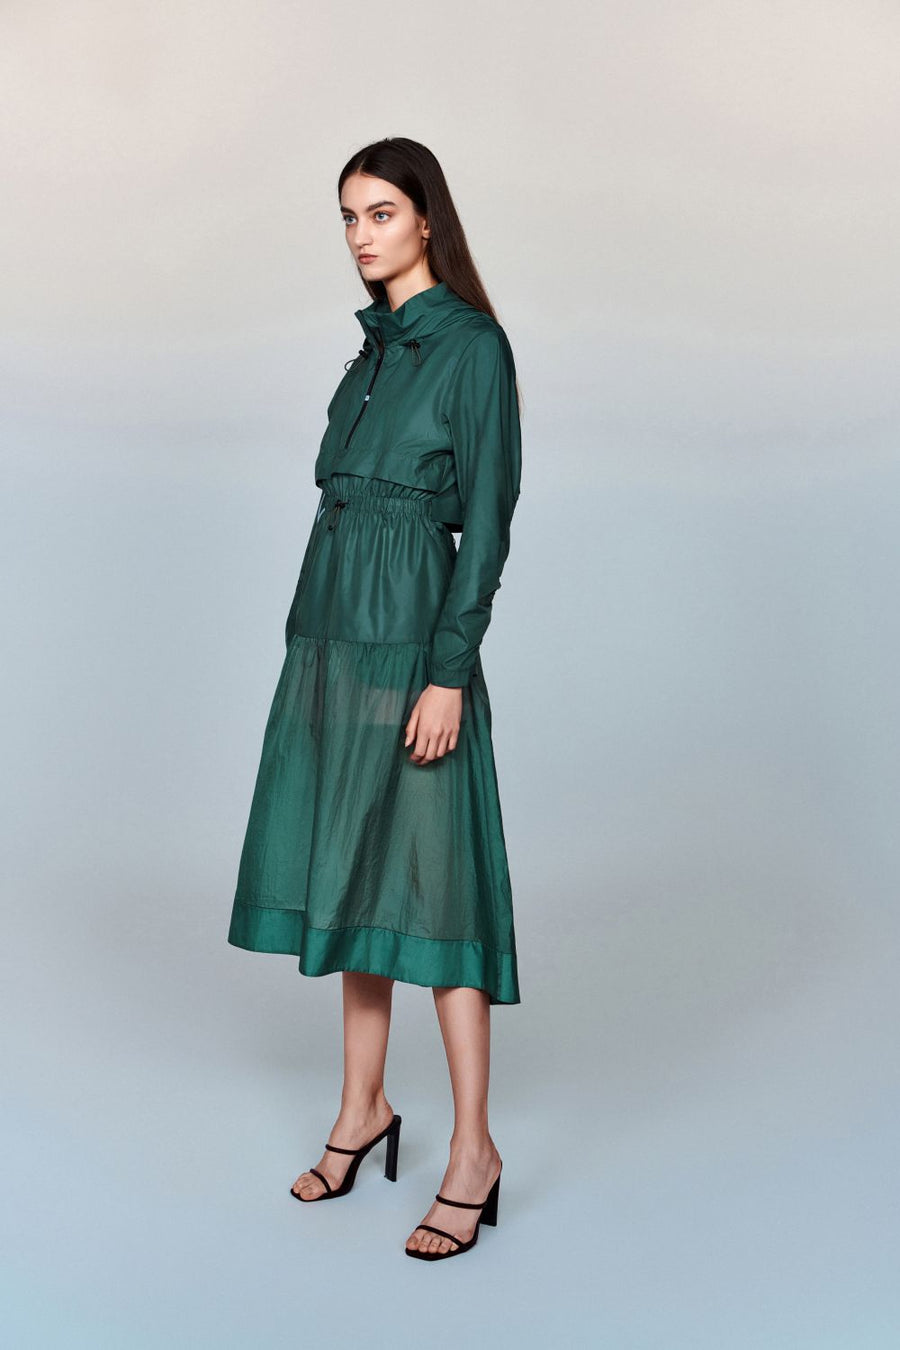 Rowan Anorak-inspired Dress with Packable Hood